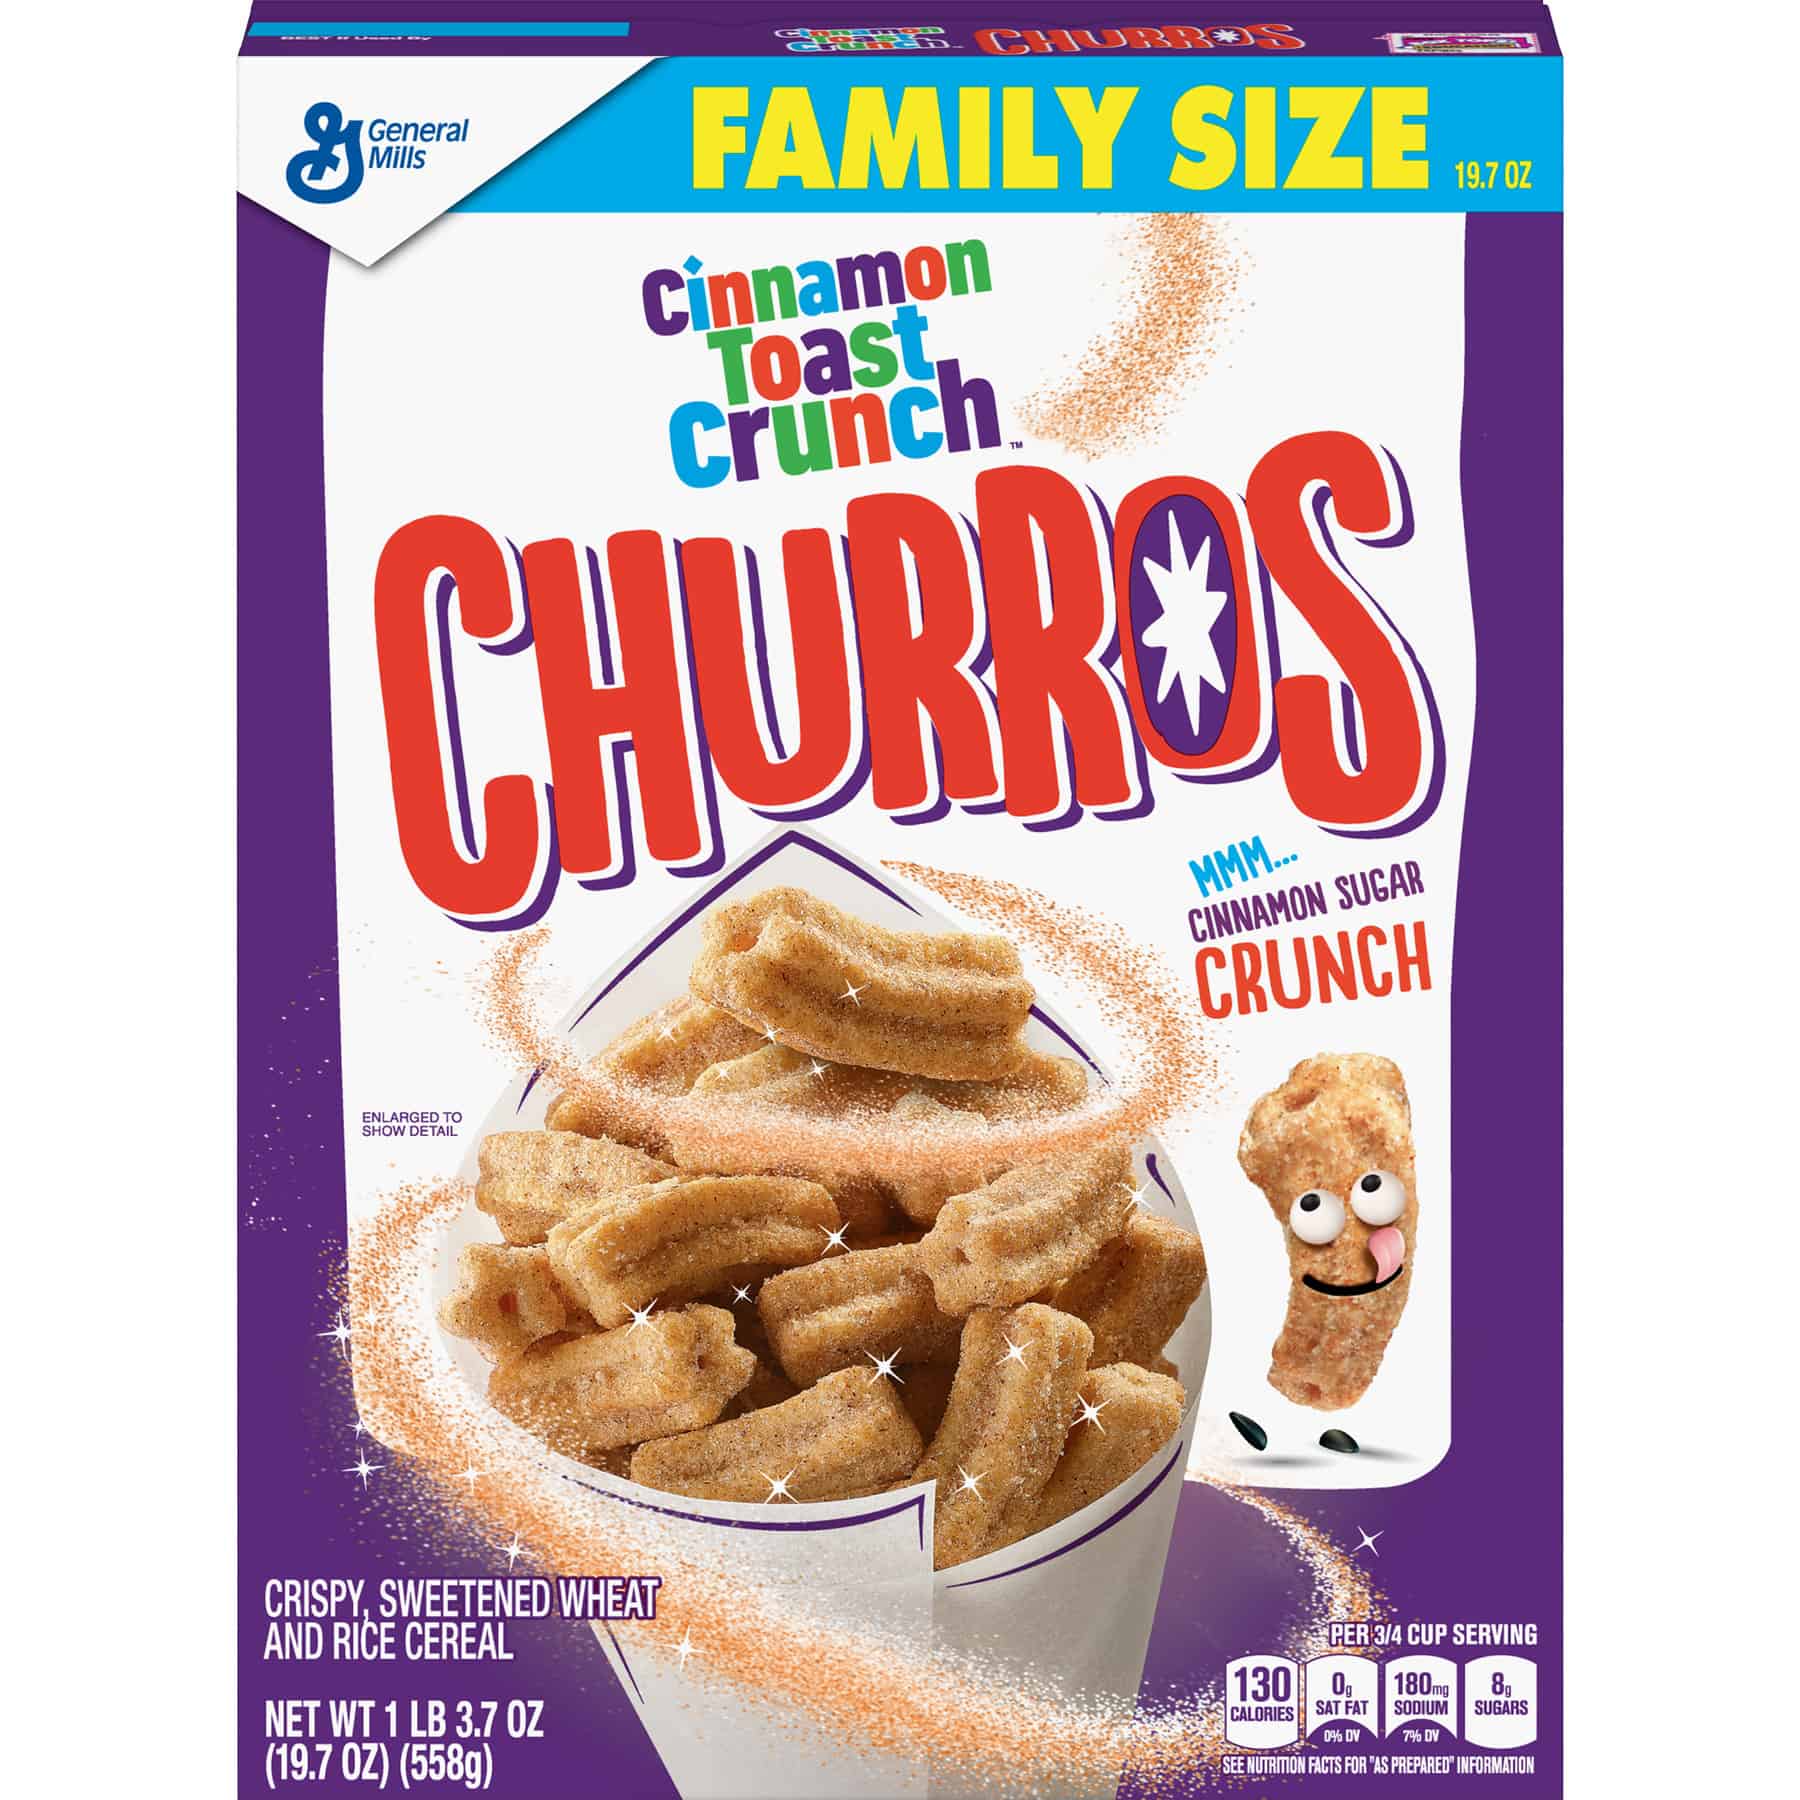 General Mills, Cinnamon Toast Crunch, Churros,Family Size,19.7 oz